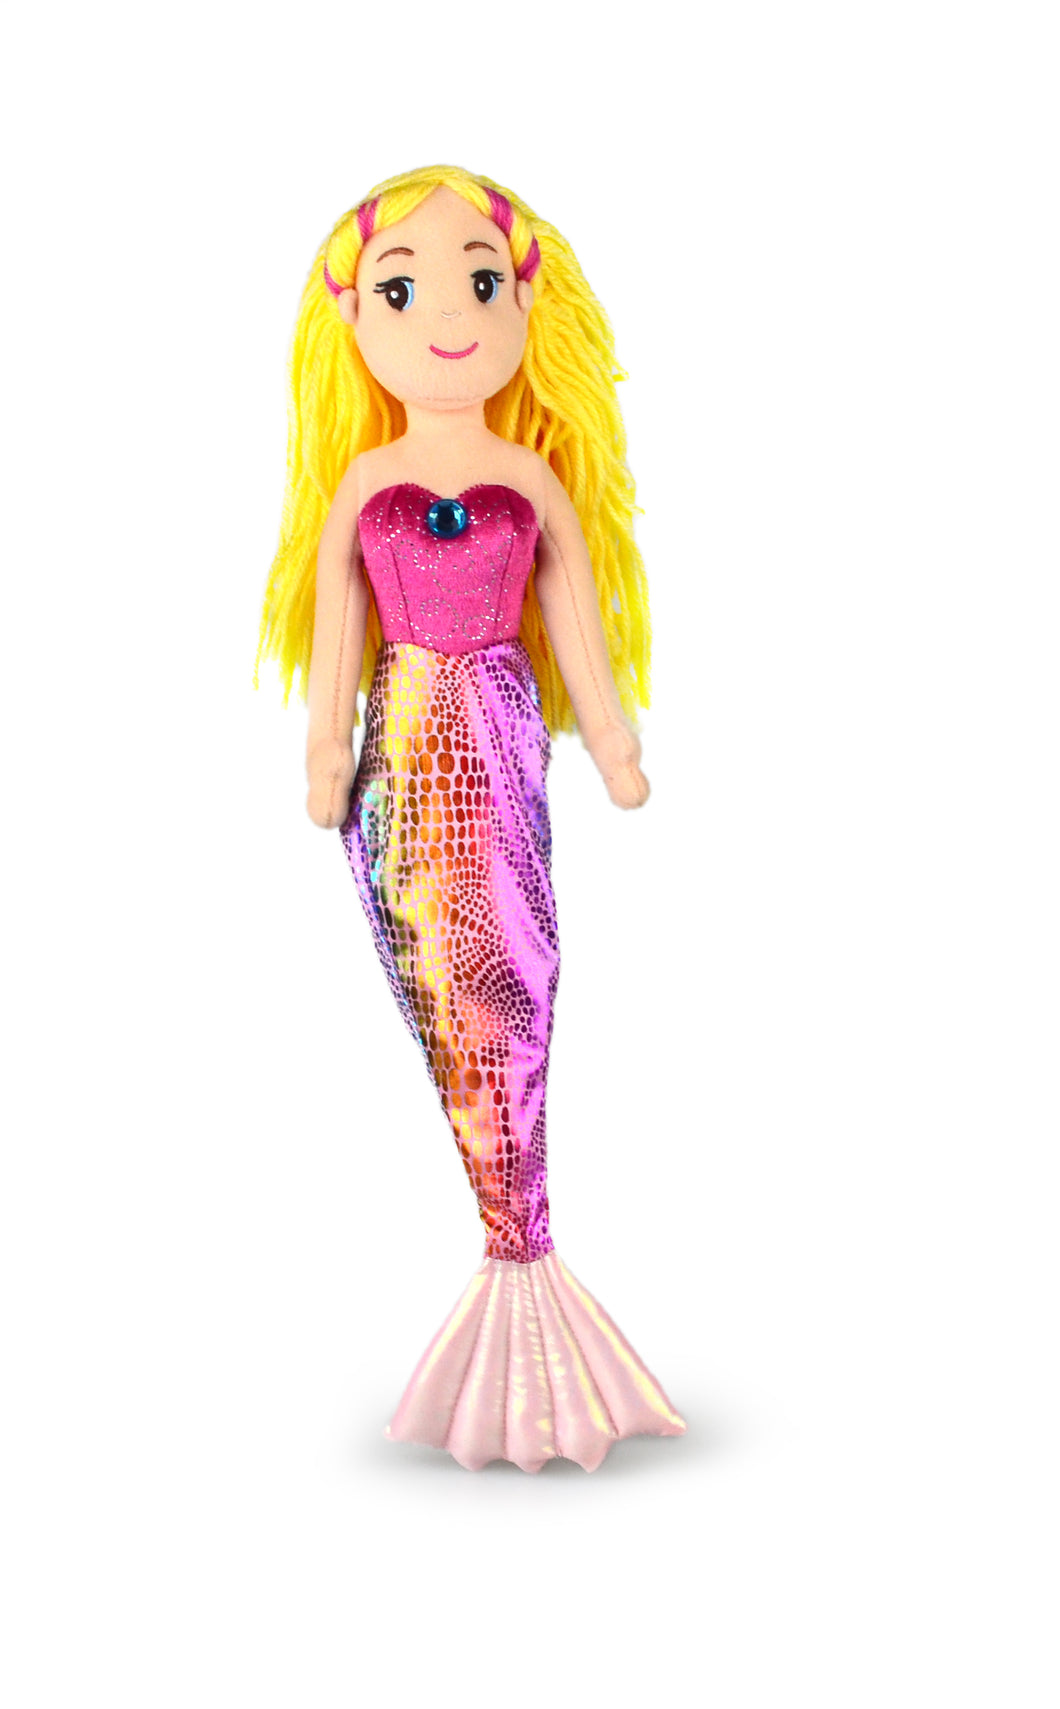 Mermaid Sparkles 45cm